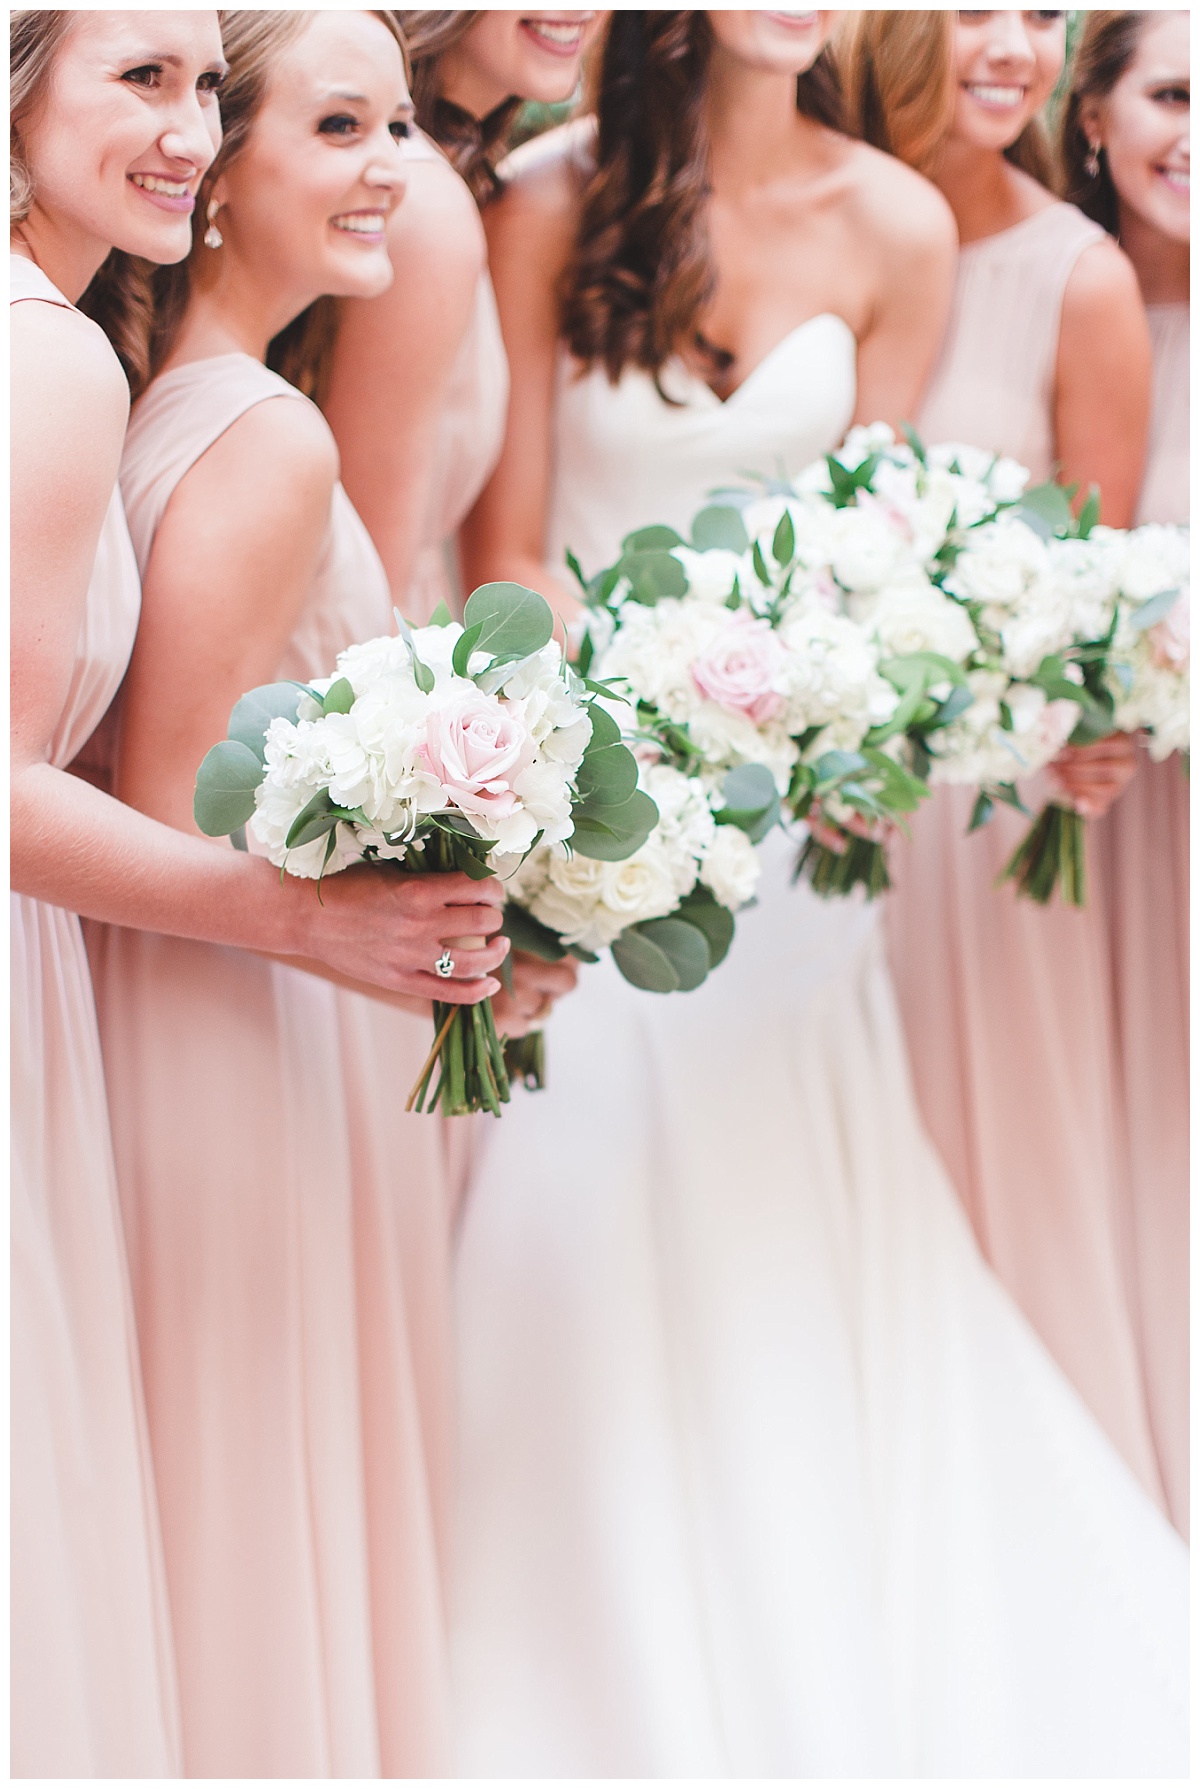 Taylor & Pearson | Dallas Wedding Florist